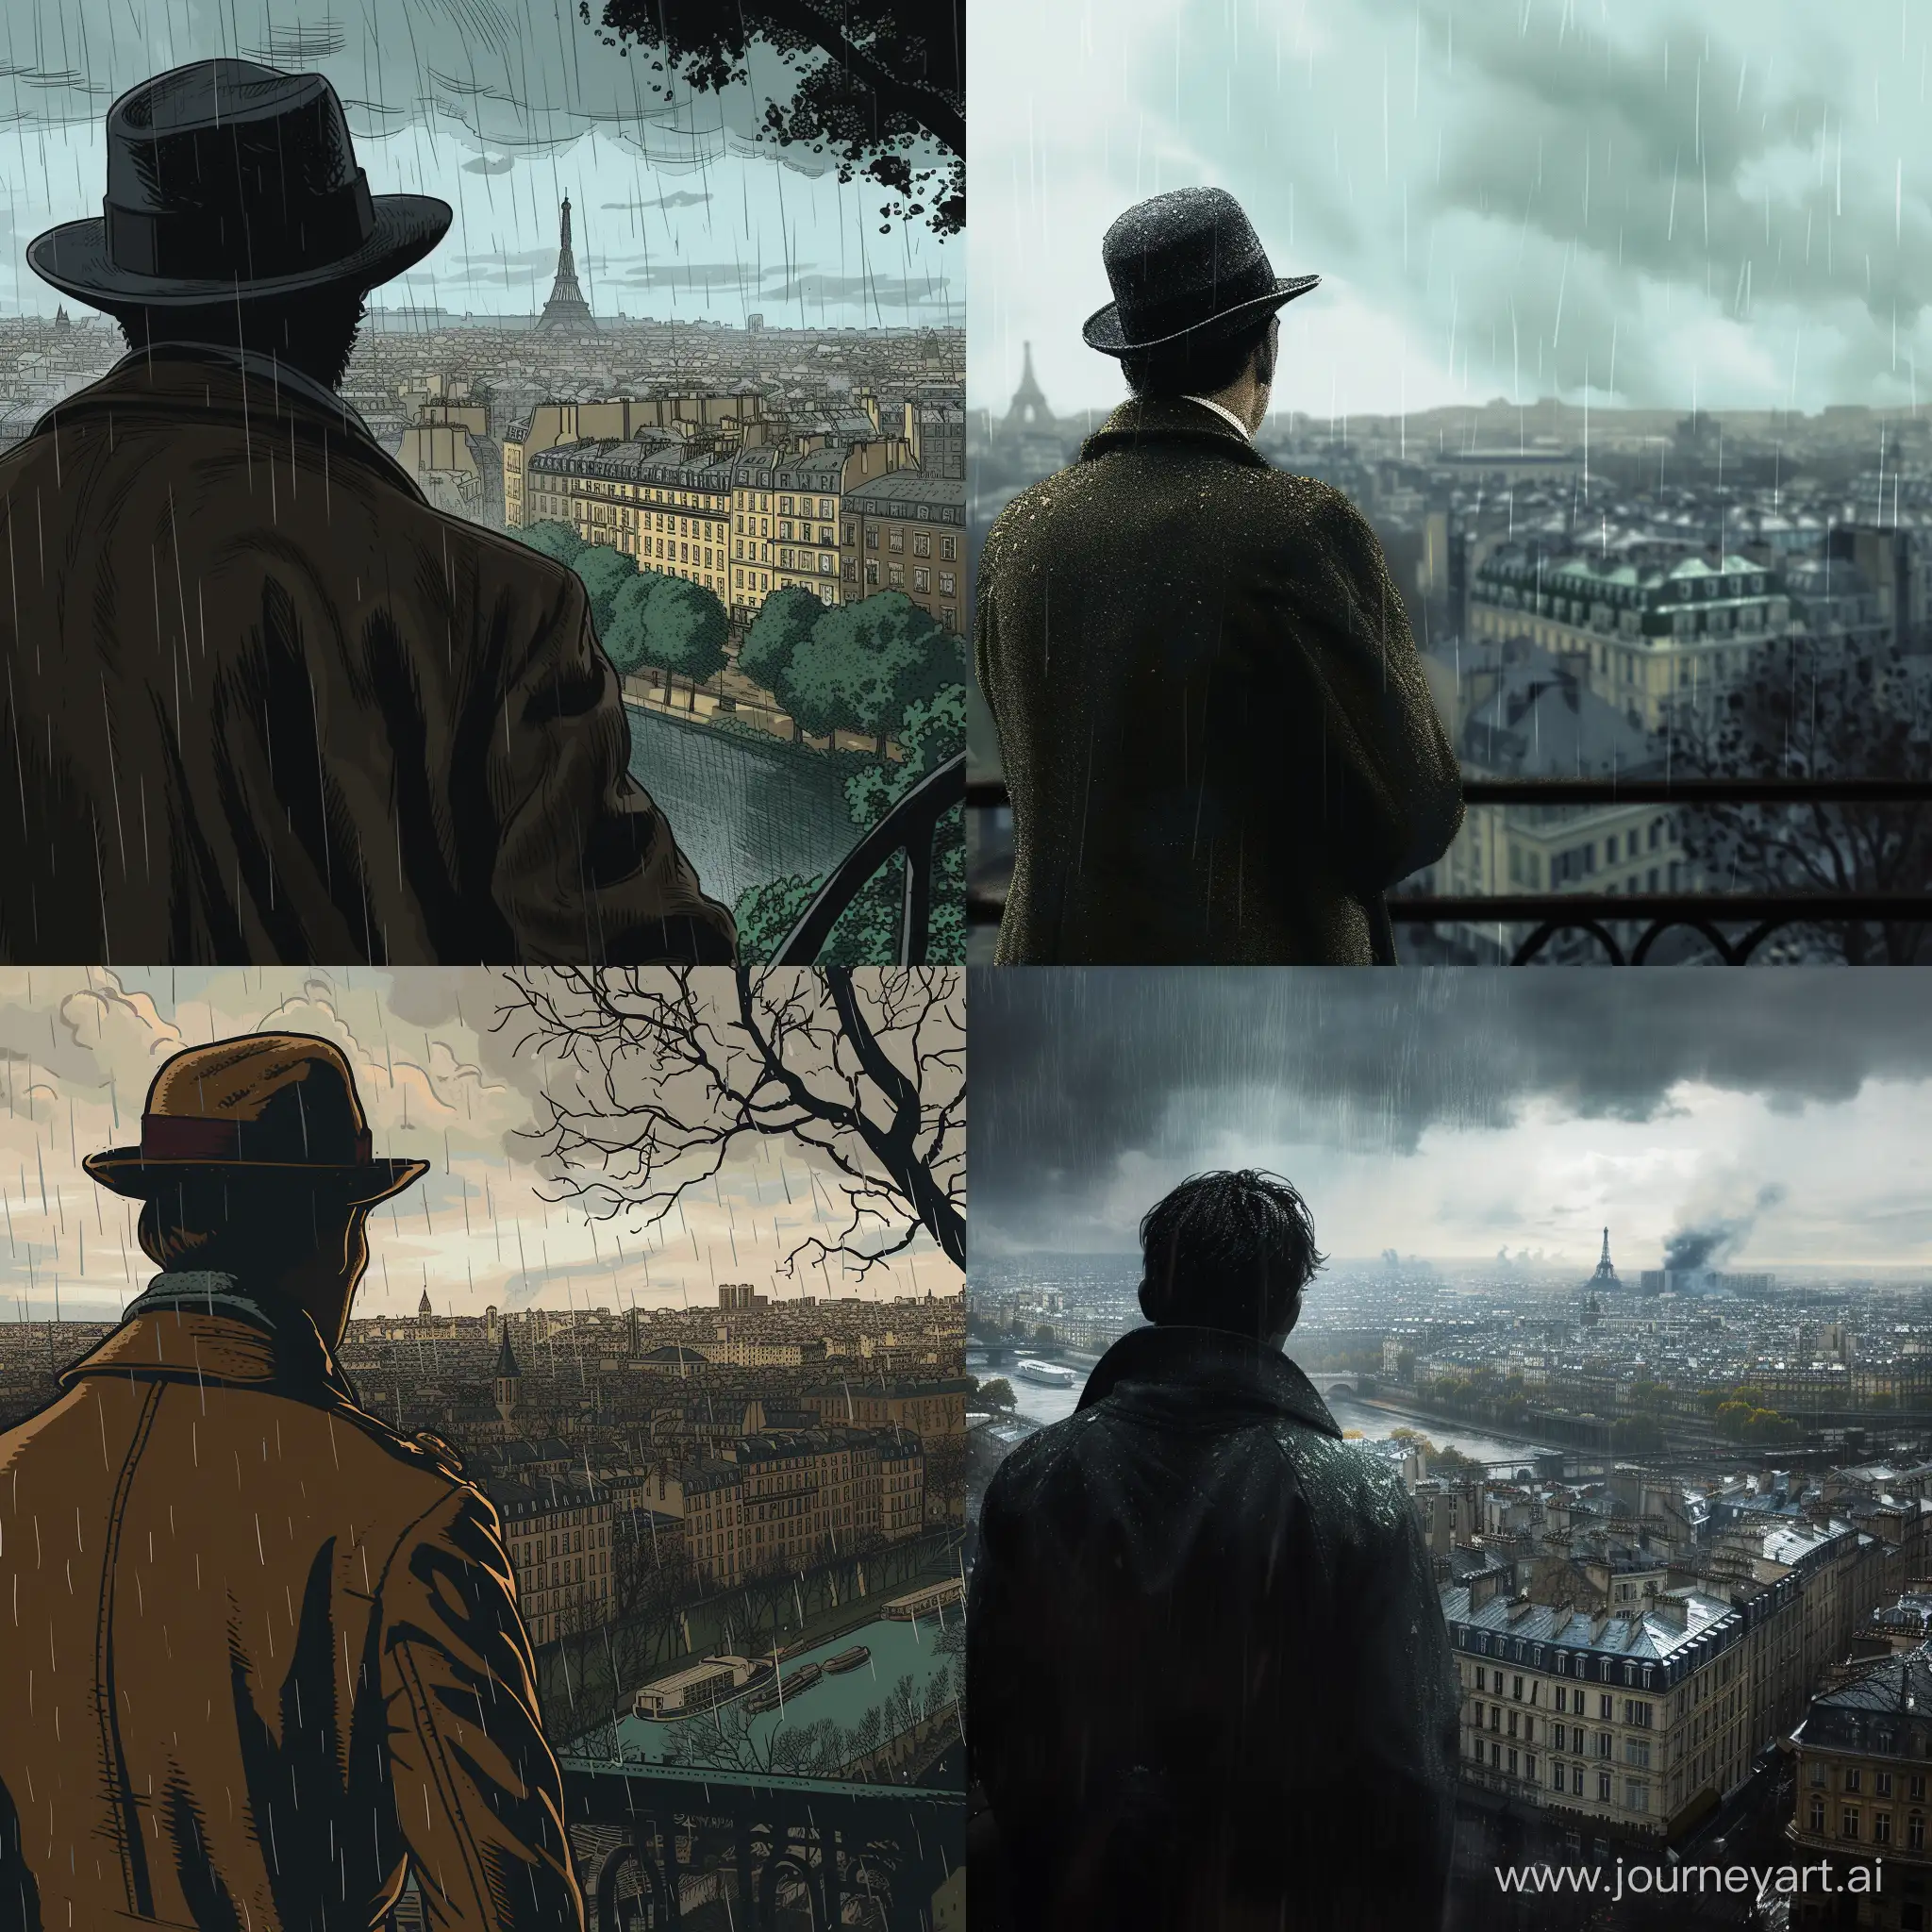 French-Citizen-Contemplating-1930s-Cityscape-in-the-Rain